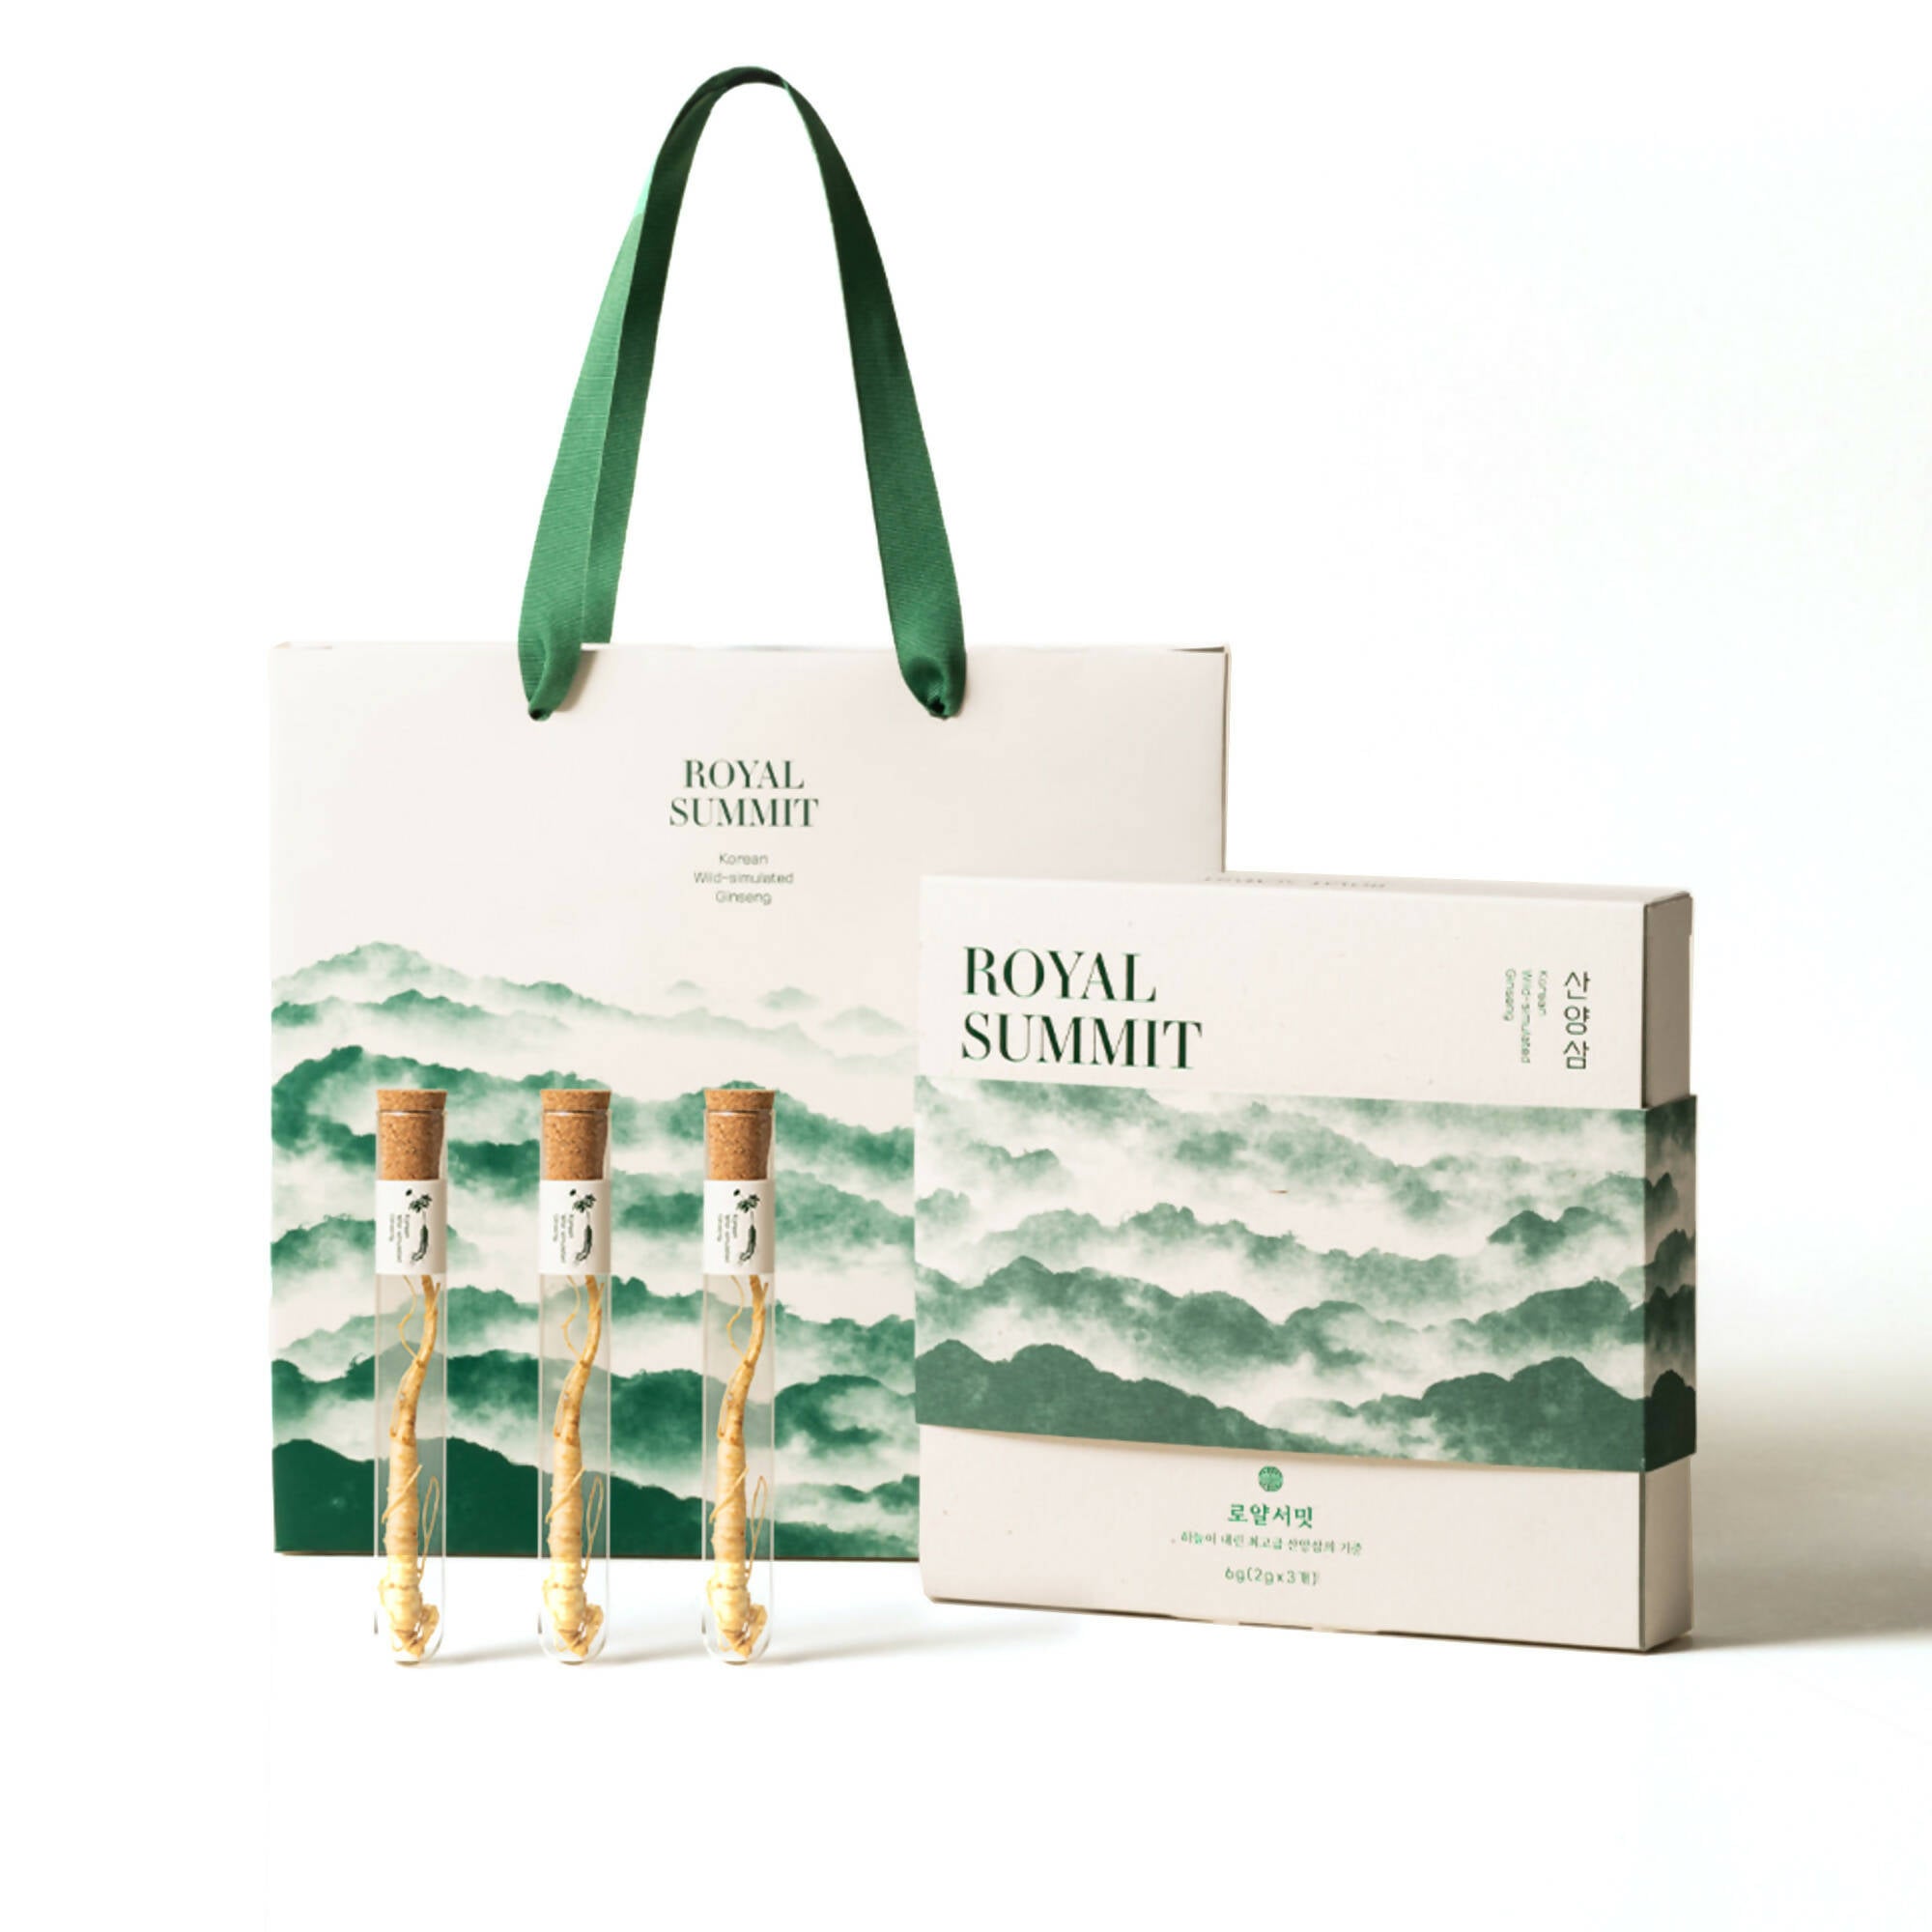 ROYAL SUMMIT Ginseng 품격있는 선물 - 산양삼 기프트 박스(3개입)